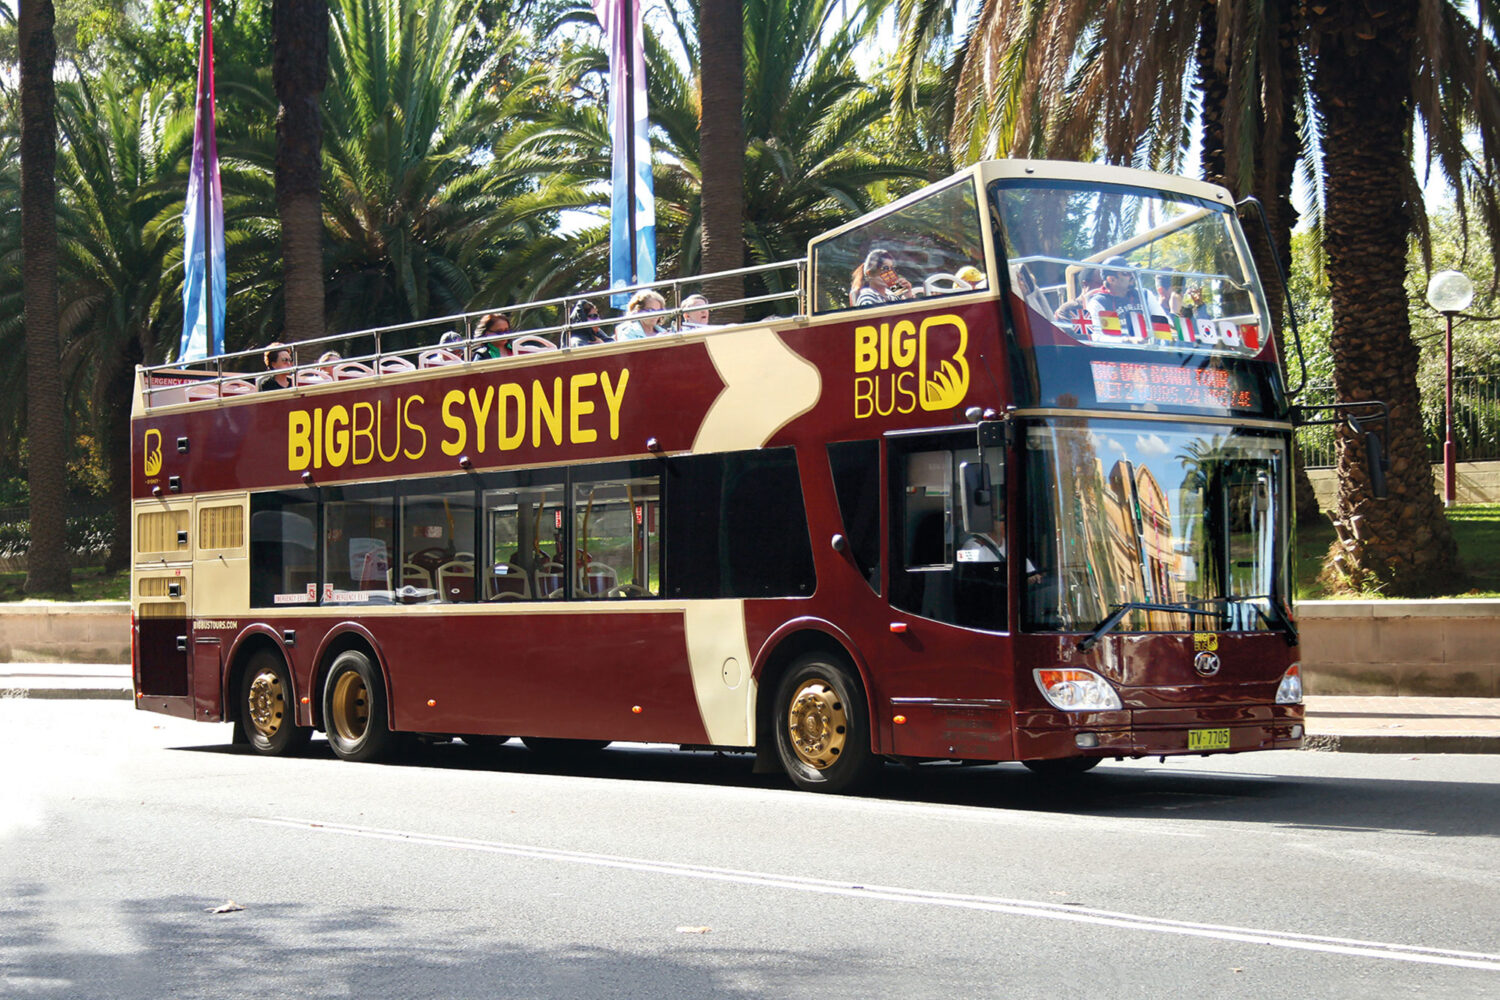 Big Bus Sydney at Royal Botanic Garden Sydney